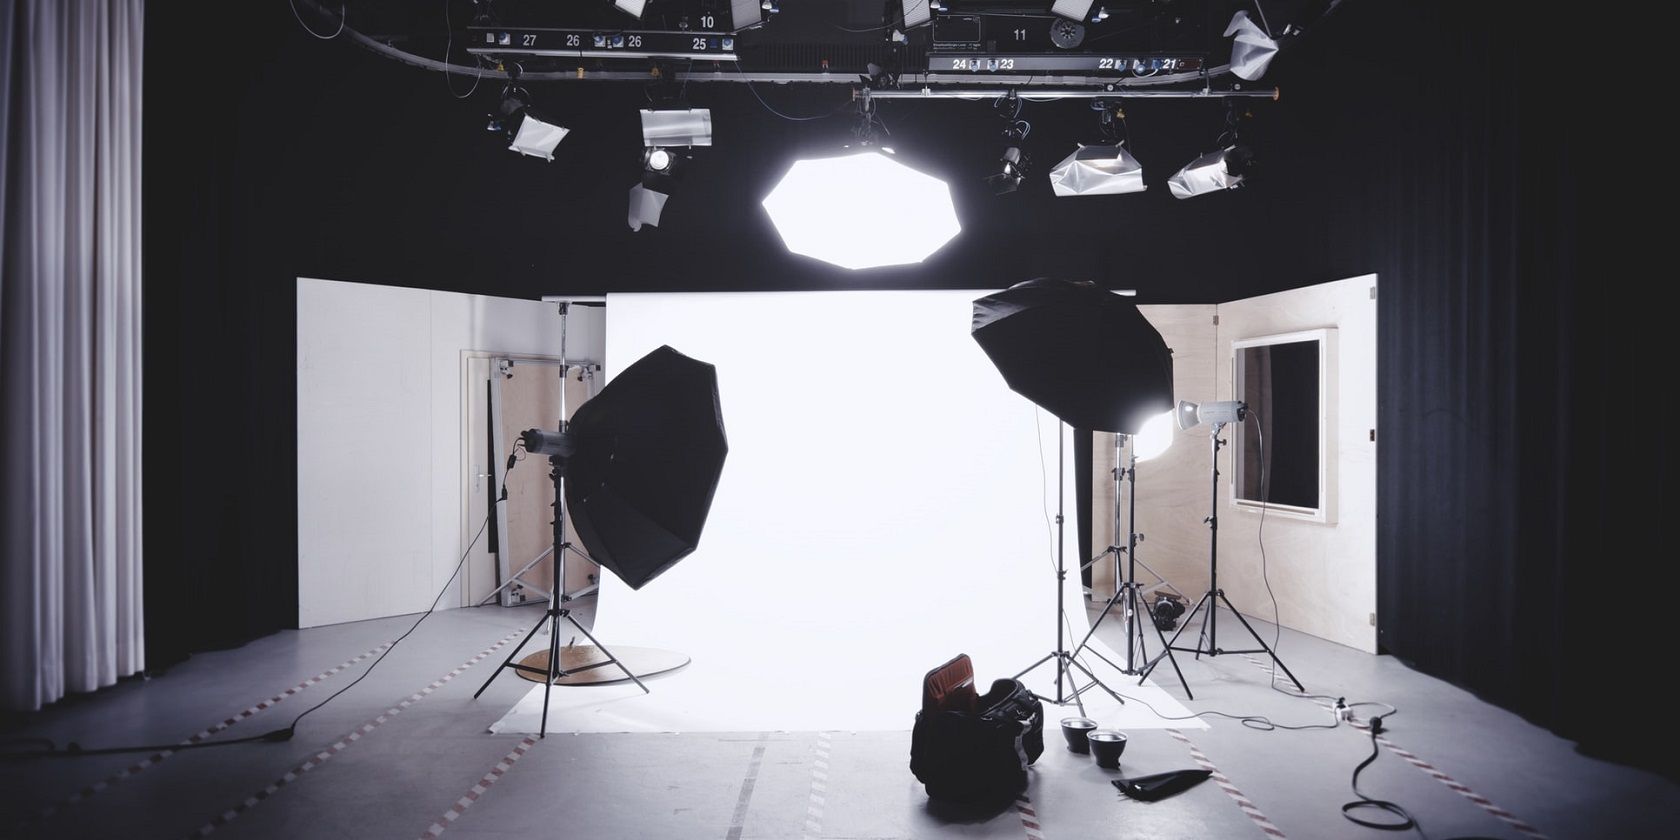 Filming Studio Setup